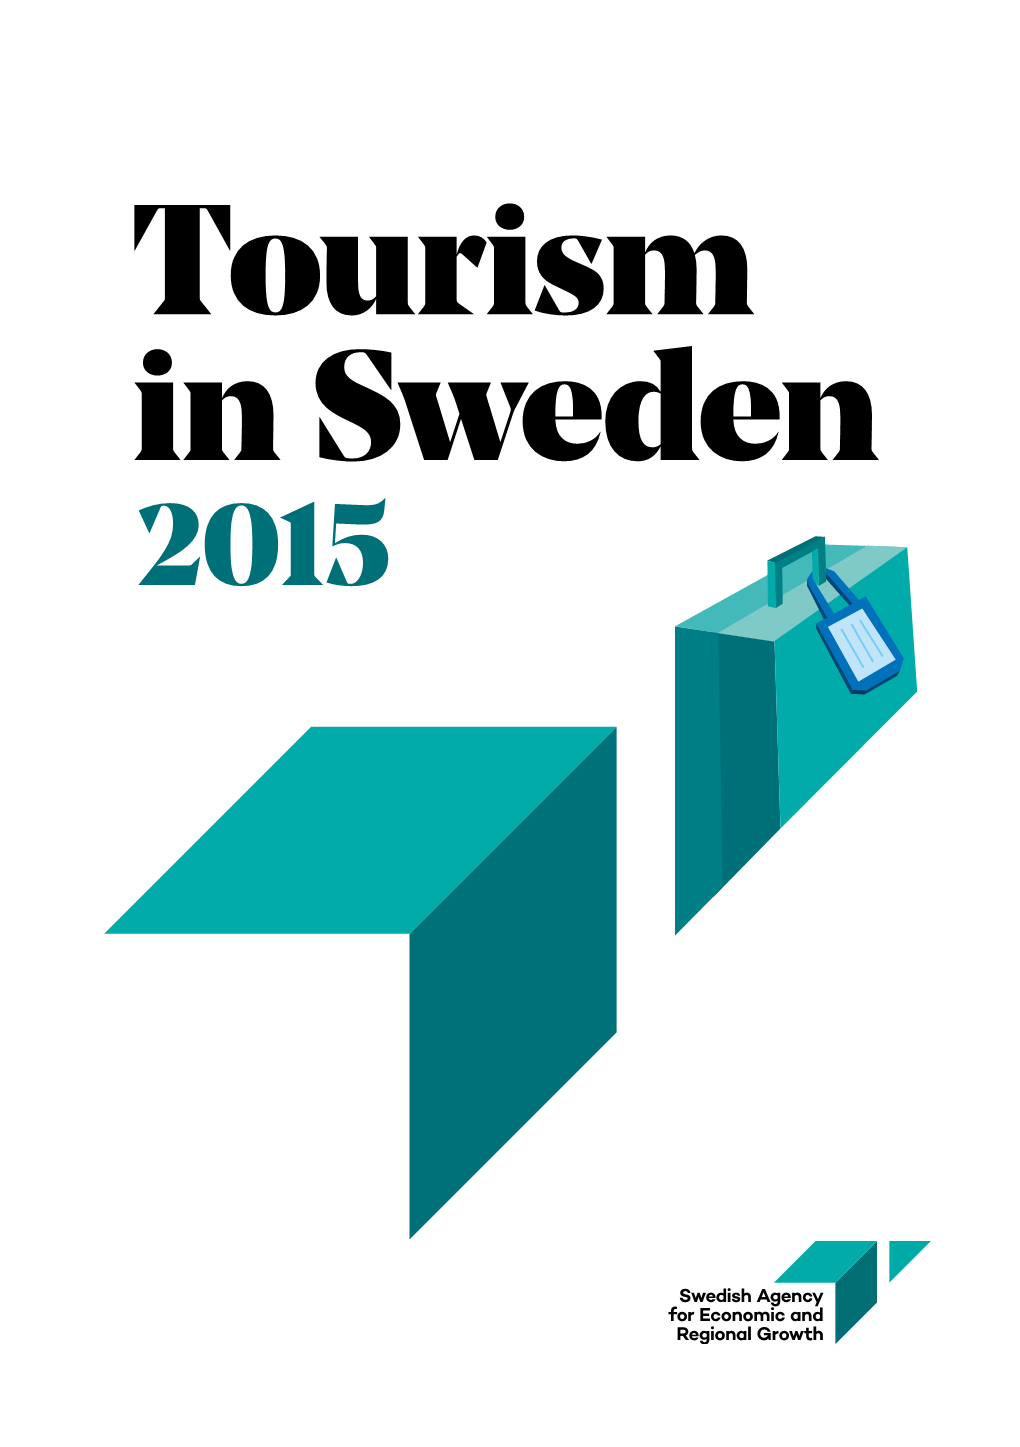 Tourism in Sweden 2015